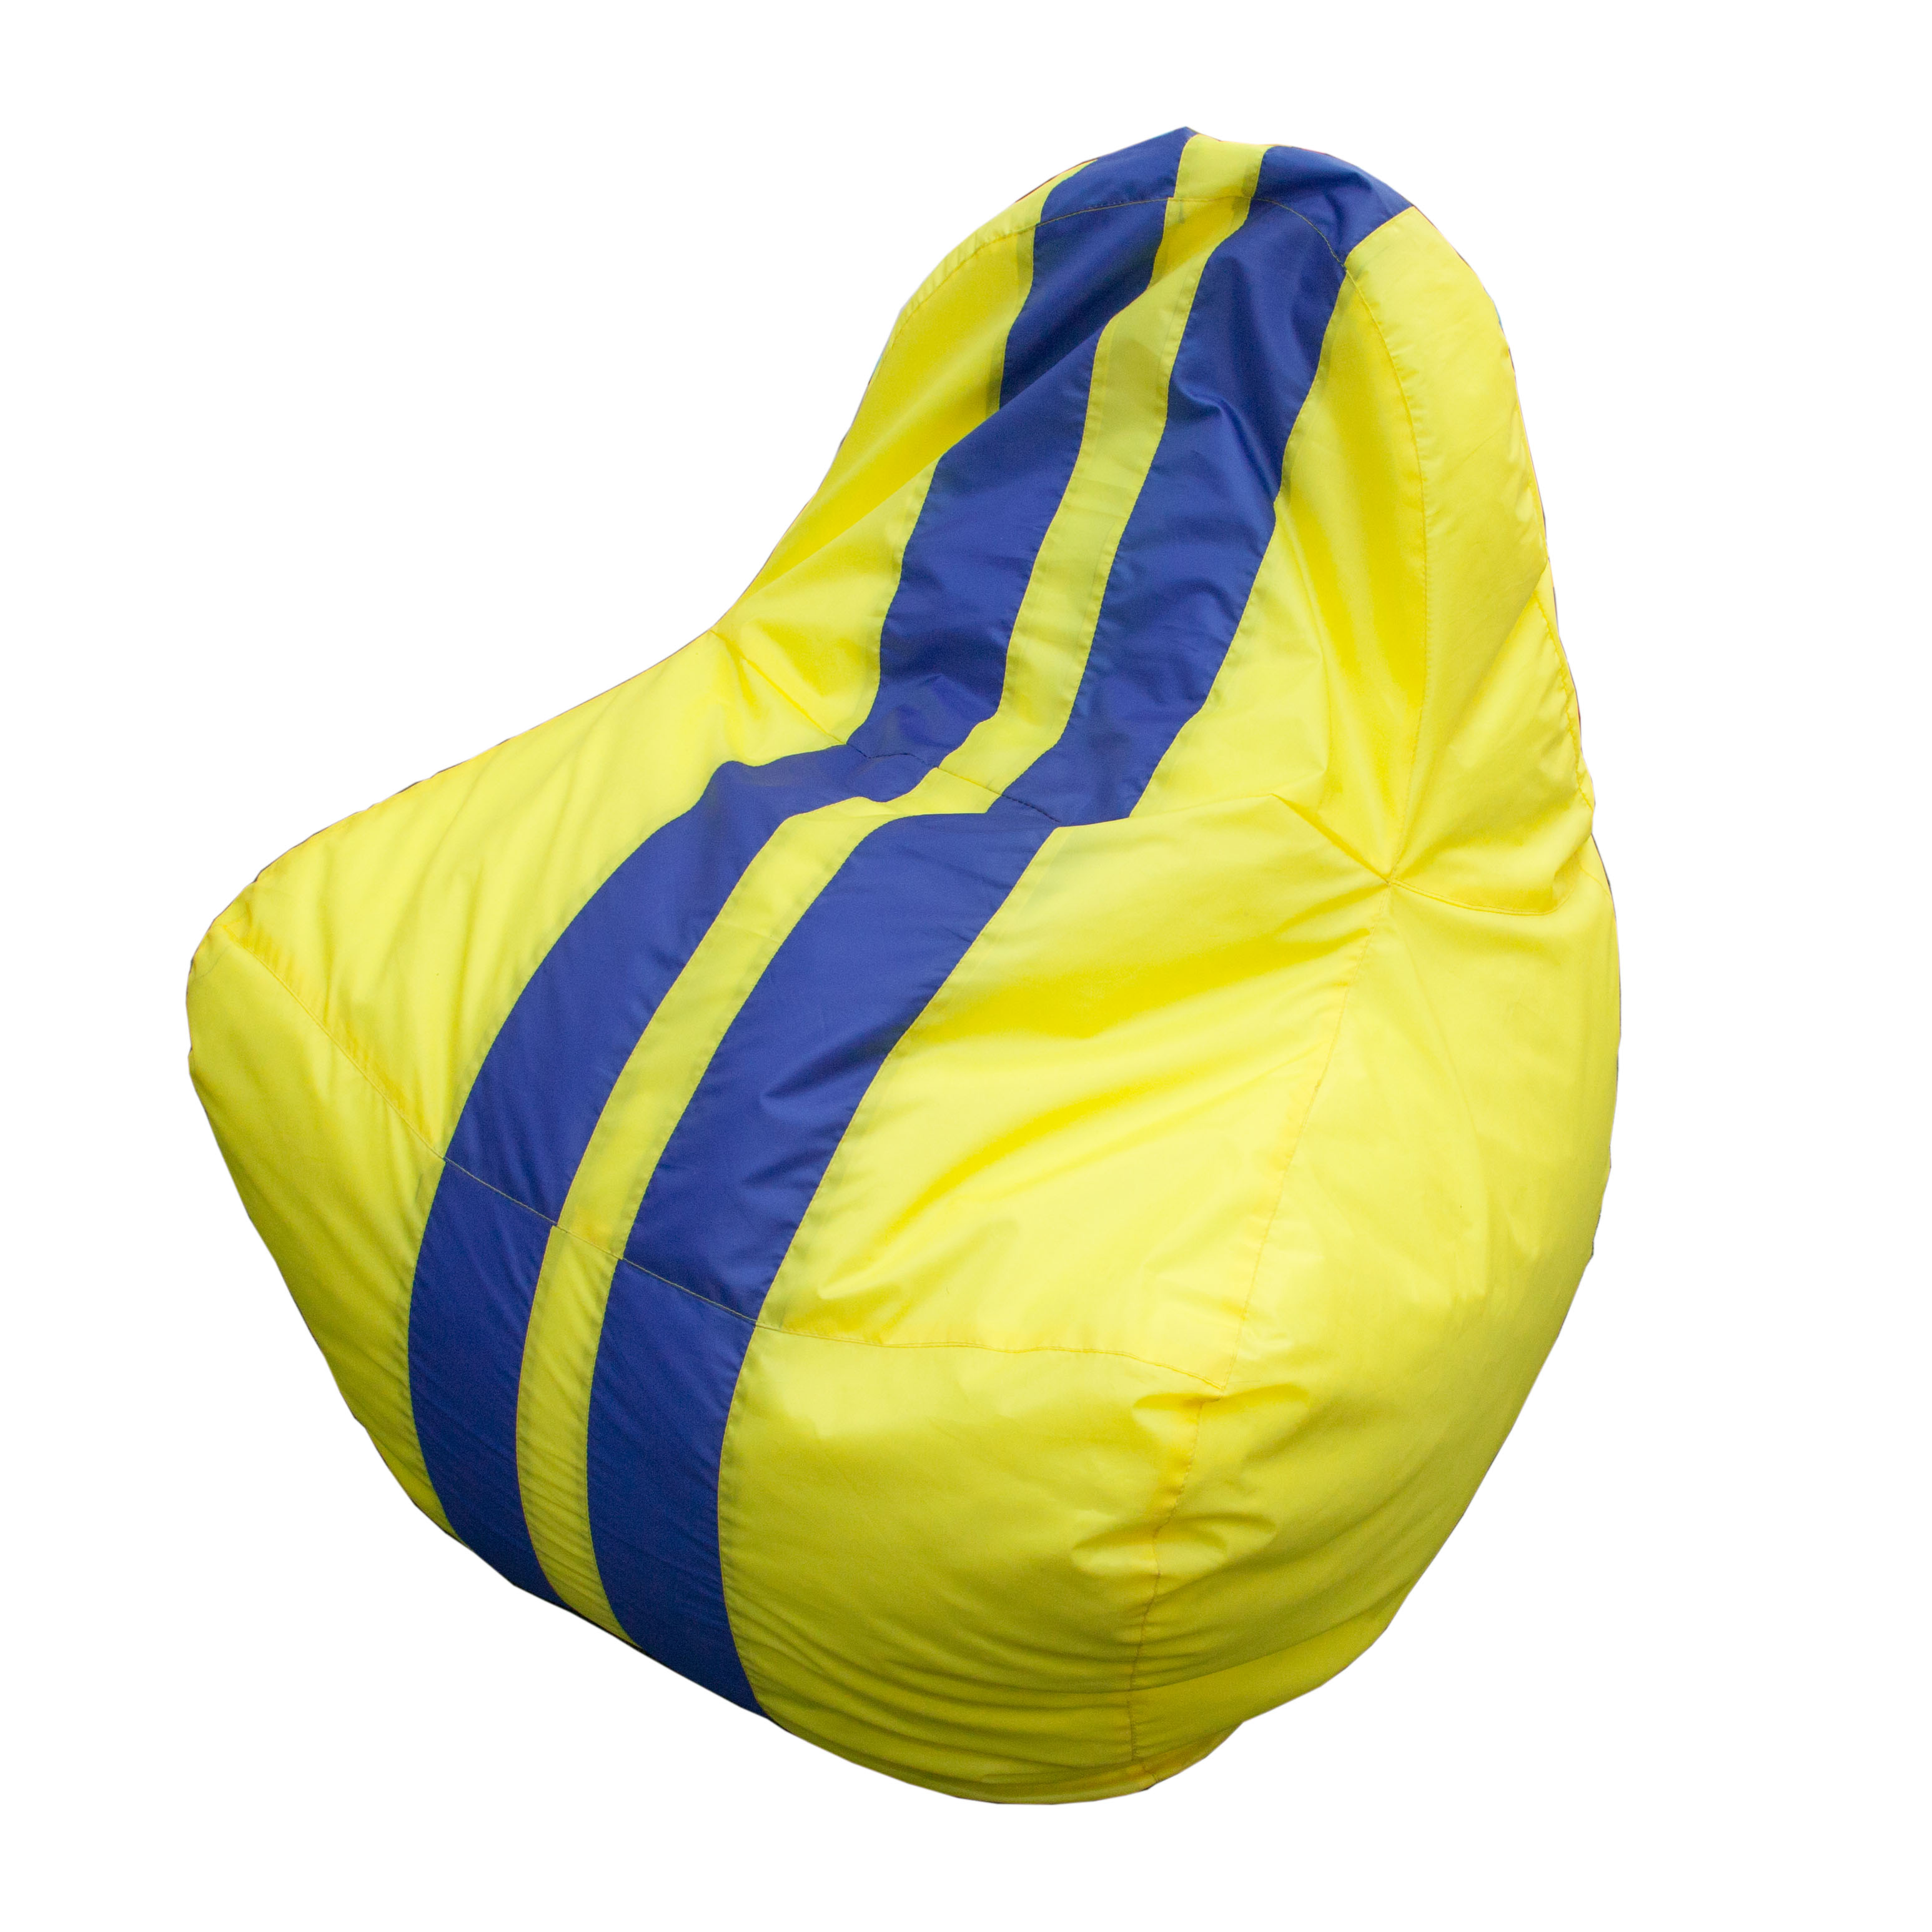 Кресло спорт желтое Dreambag, цвет желтый - фото 1